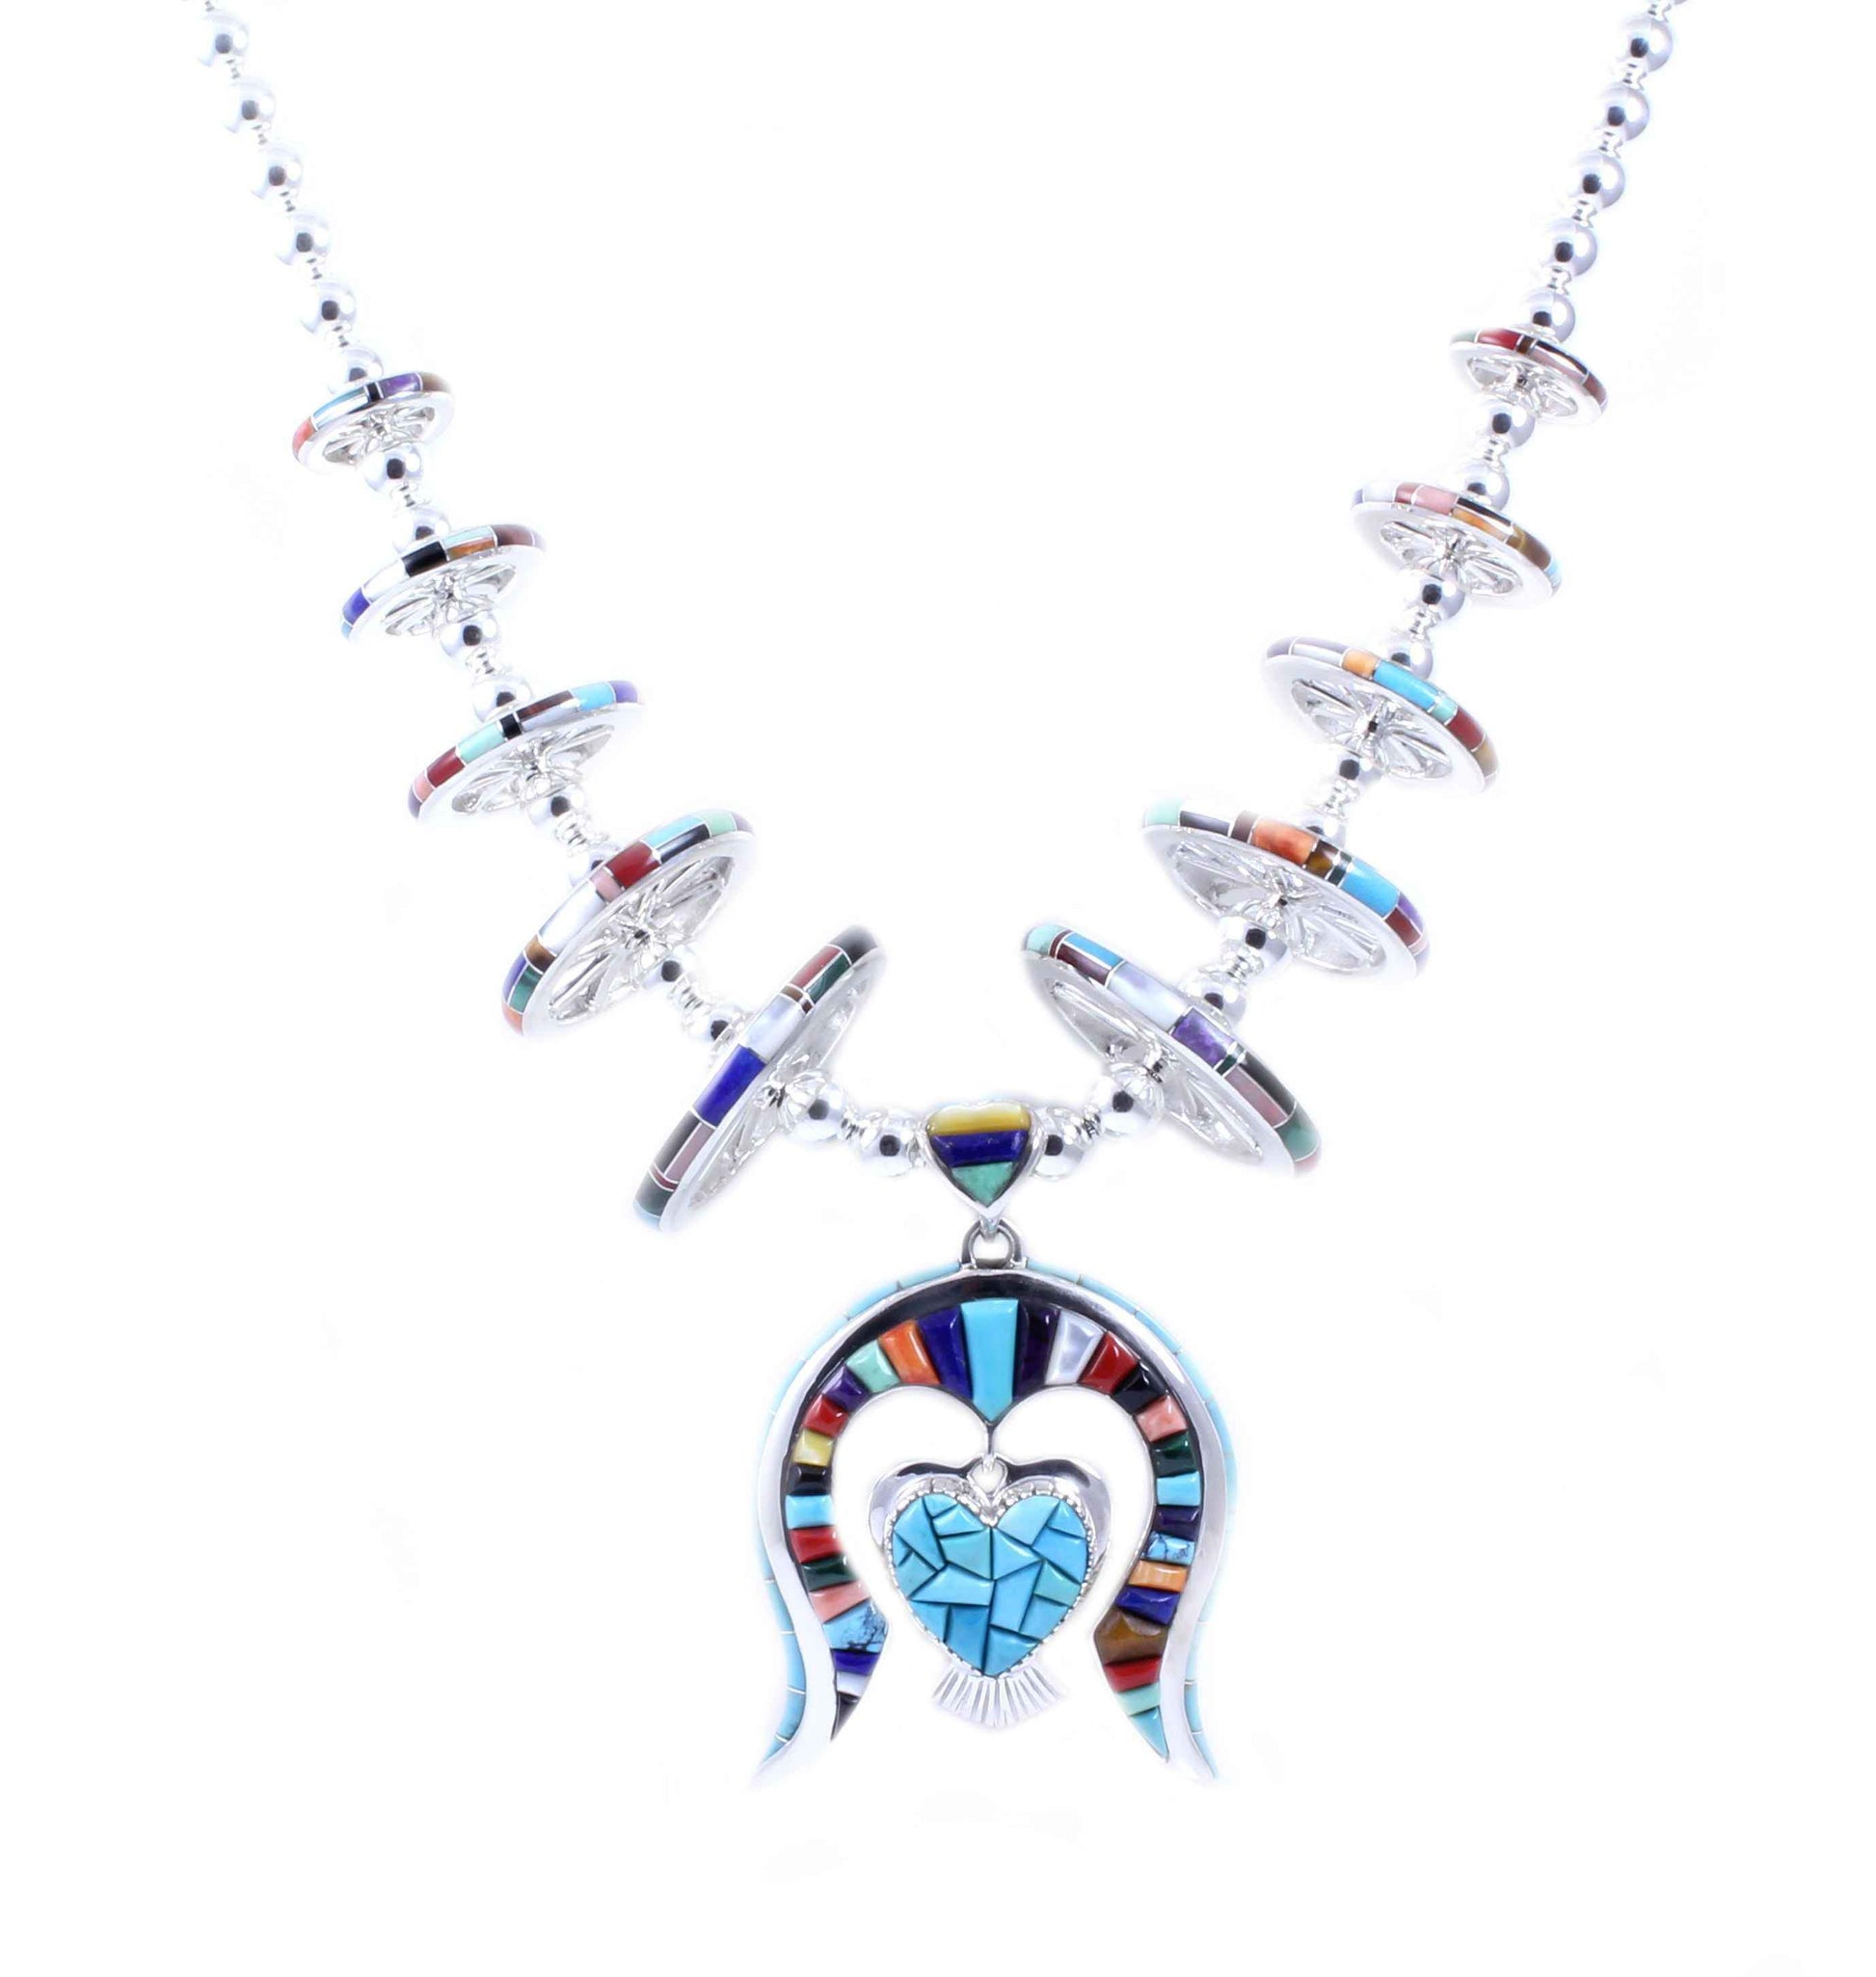 Ben Nighthorse-Heart Of Naja Necklace-Sorrel Sky Gallery-Jewelry